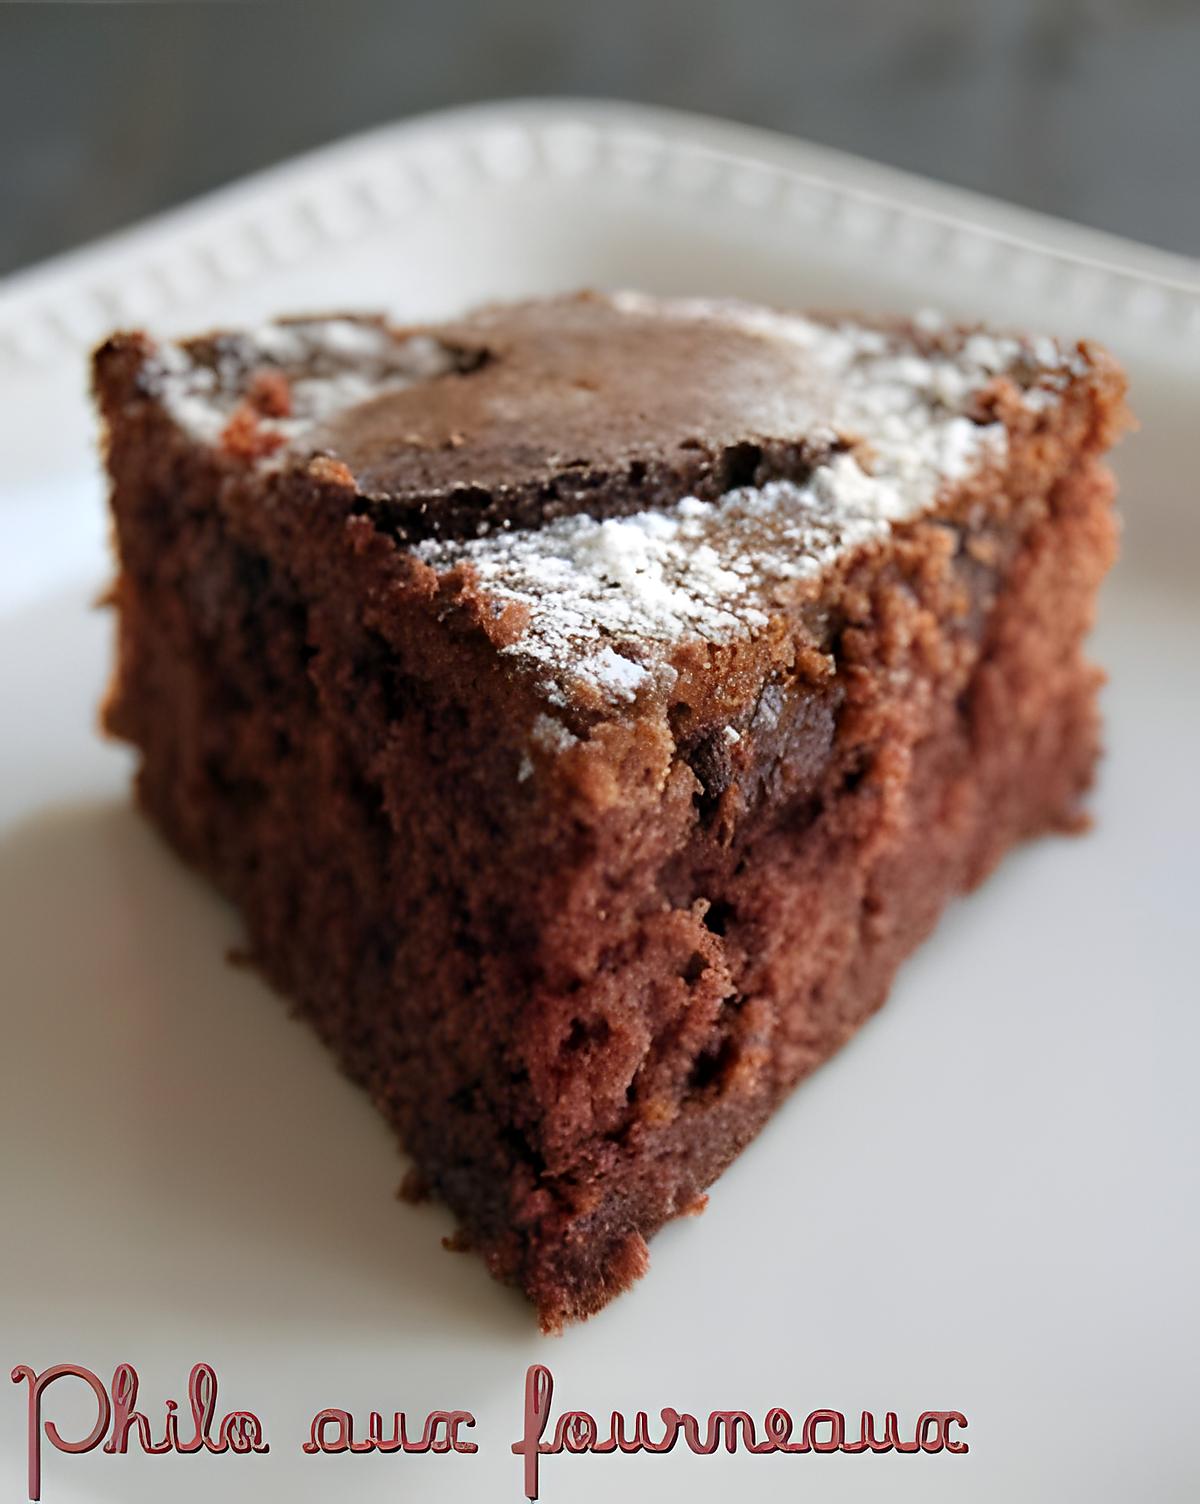 recette Gâteau façon muffin au chocolat